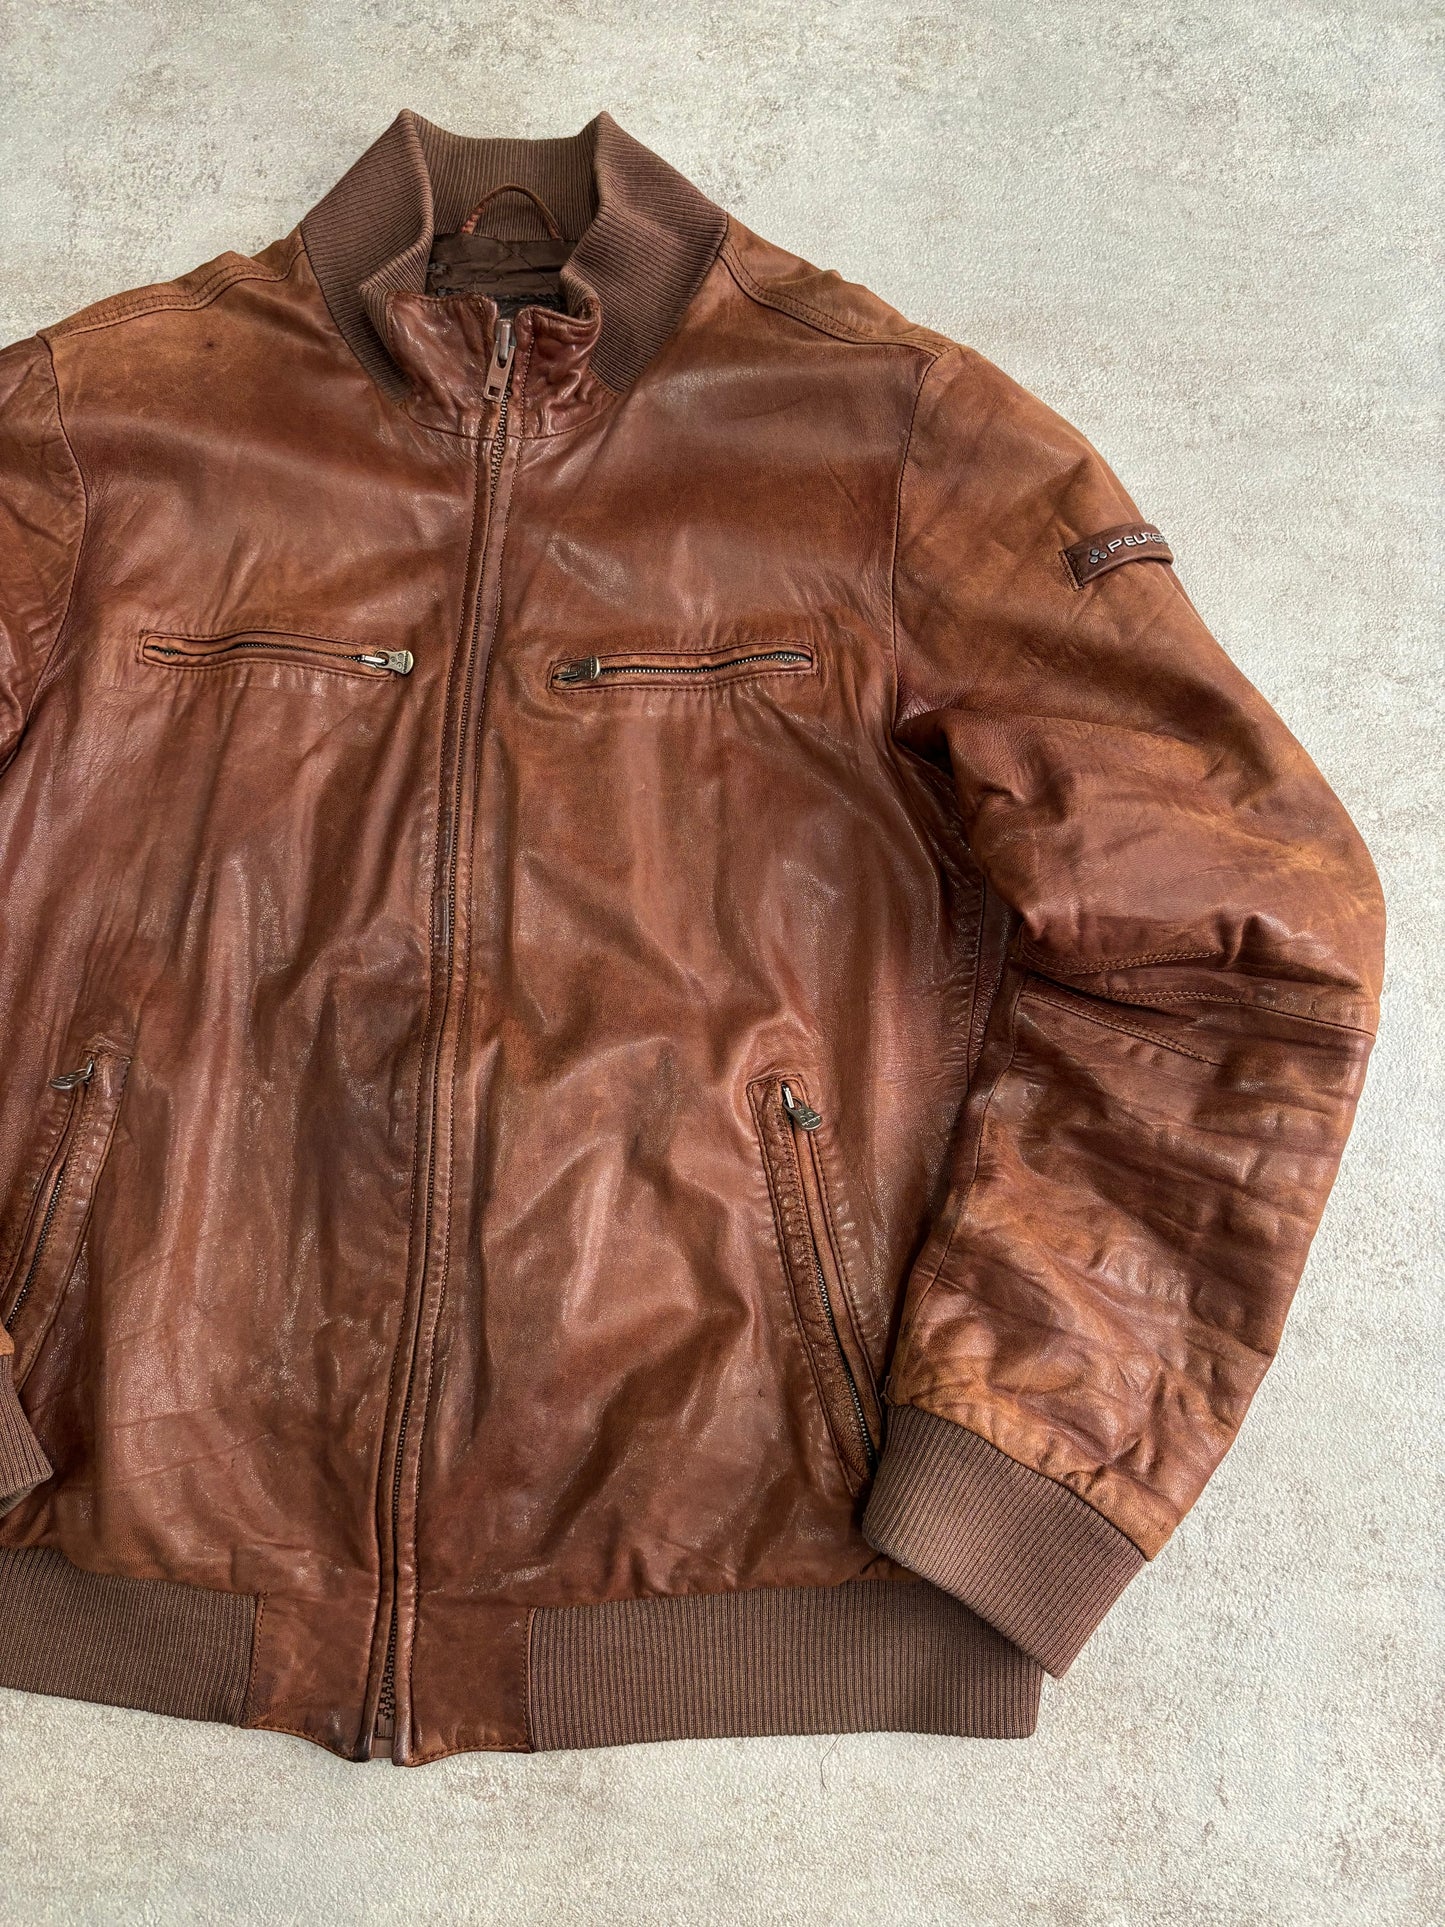 Peuterey Vintage Leather Jacket - L